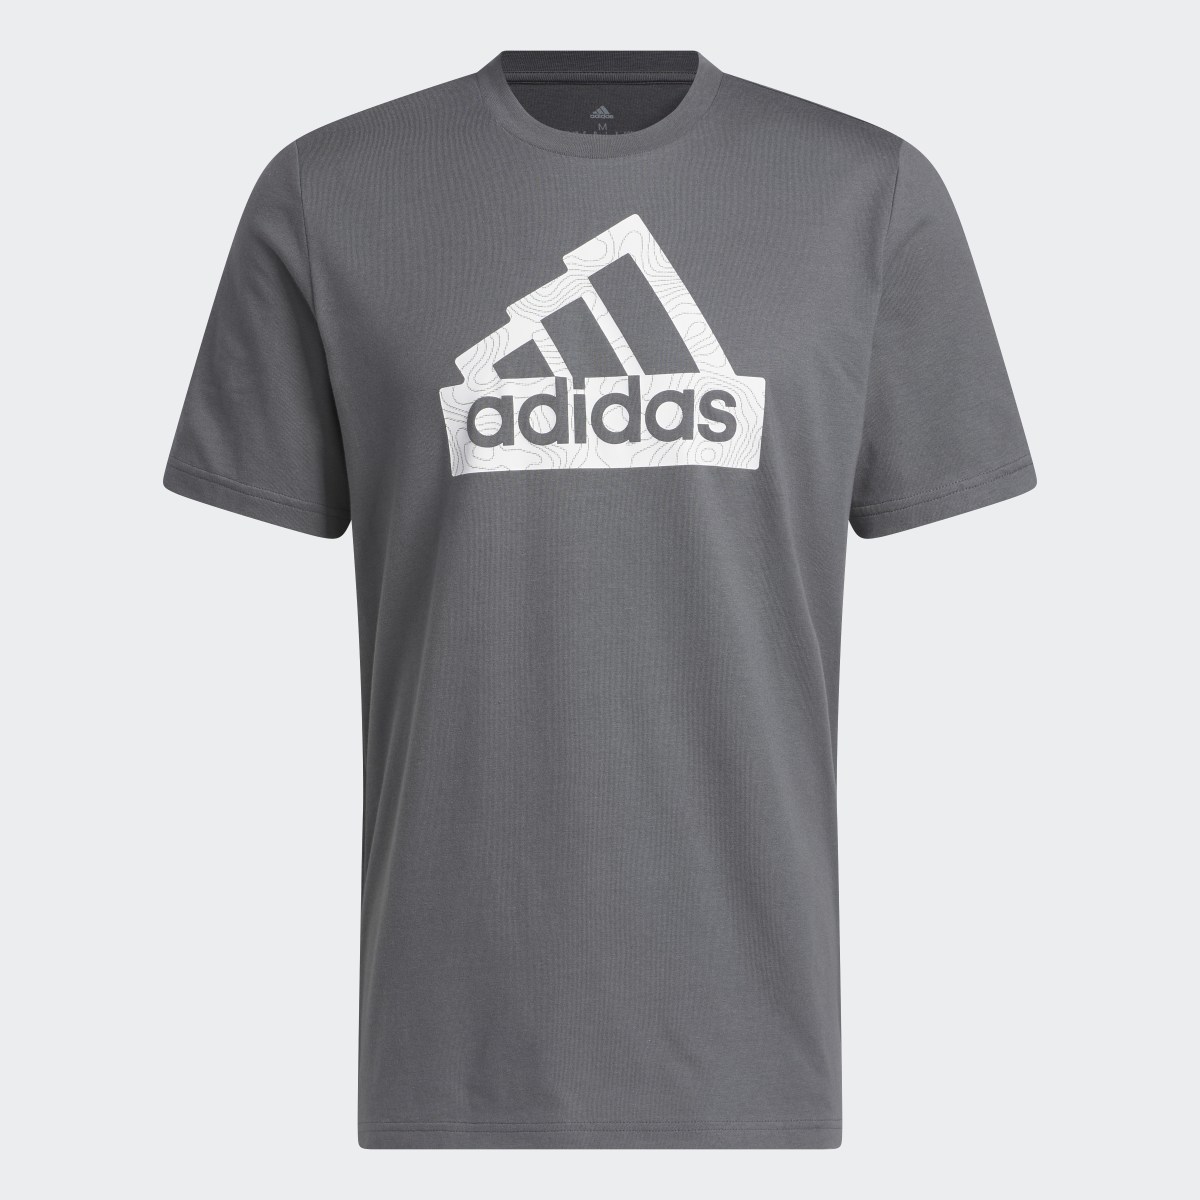 Adidas City Escape Graphic T-Shirt. 5